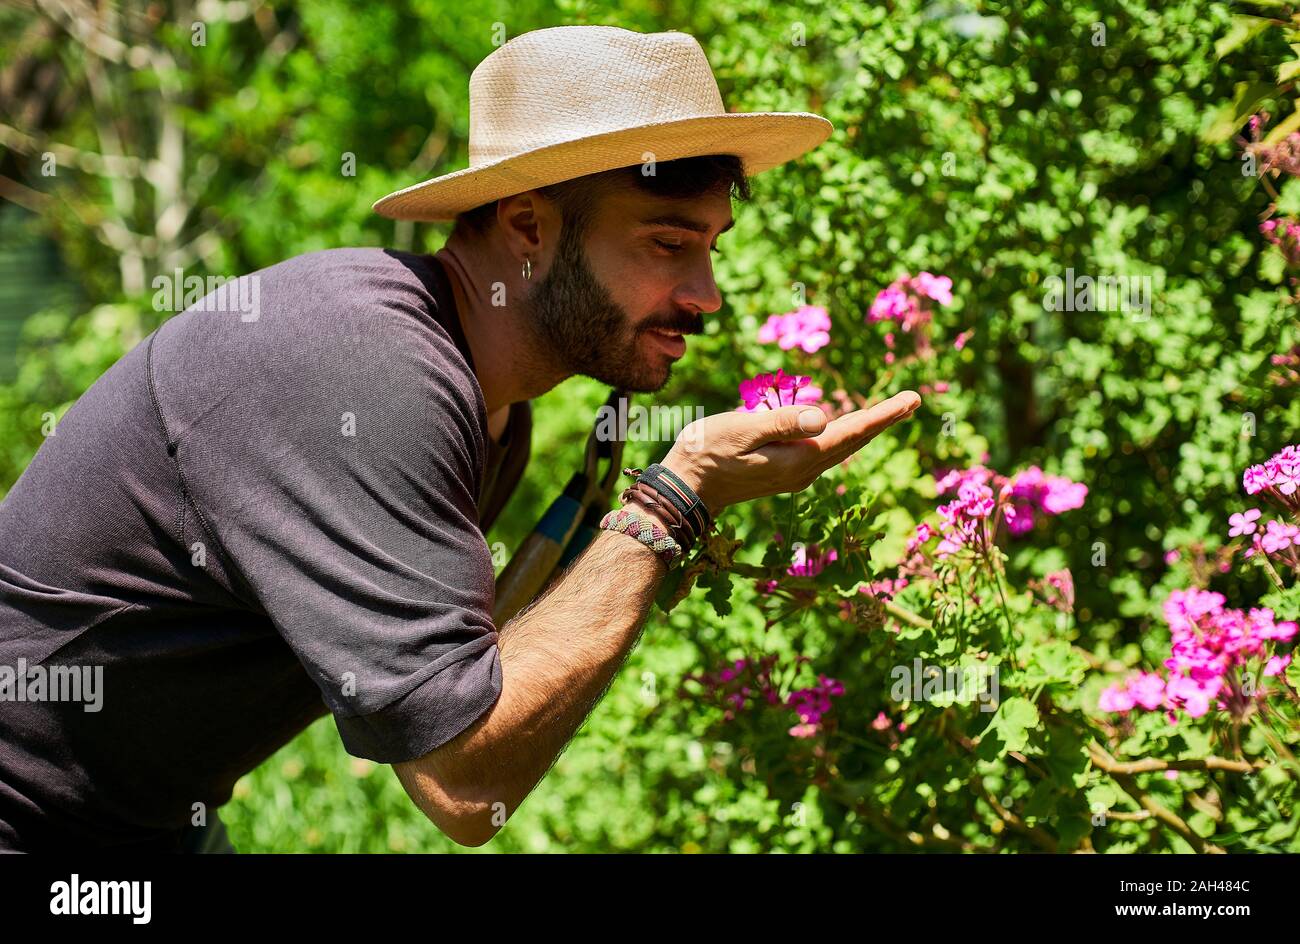 Man smelling flowers in garden Stock Photo